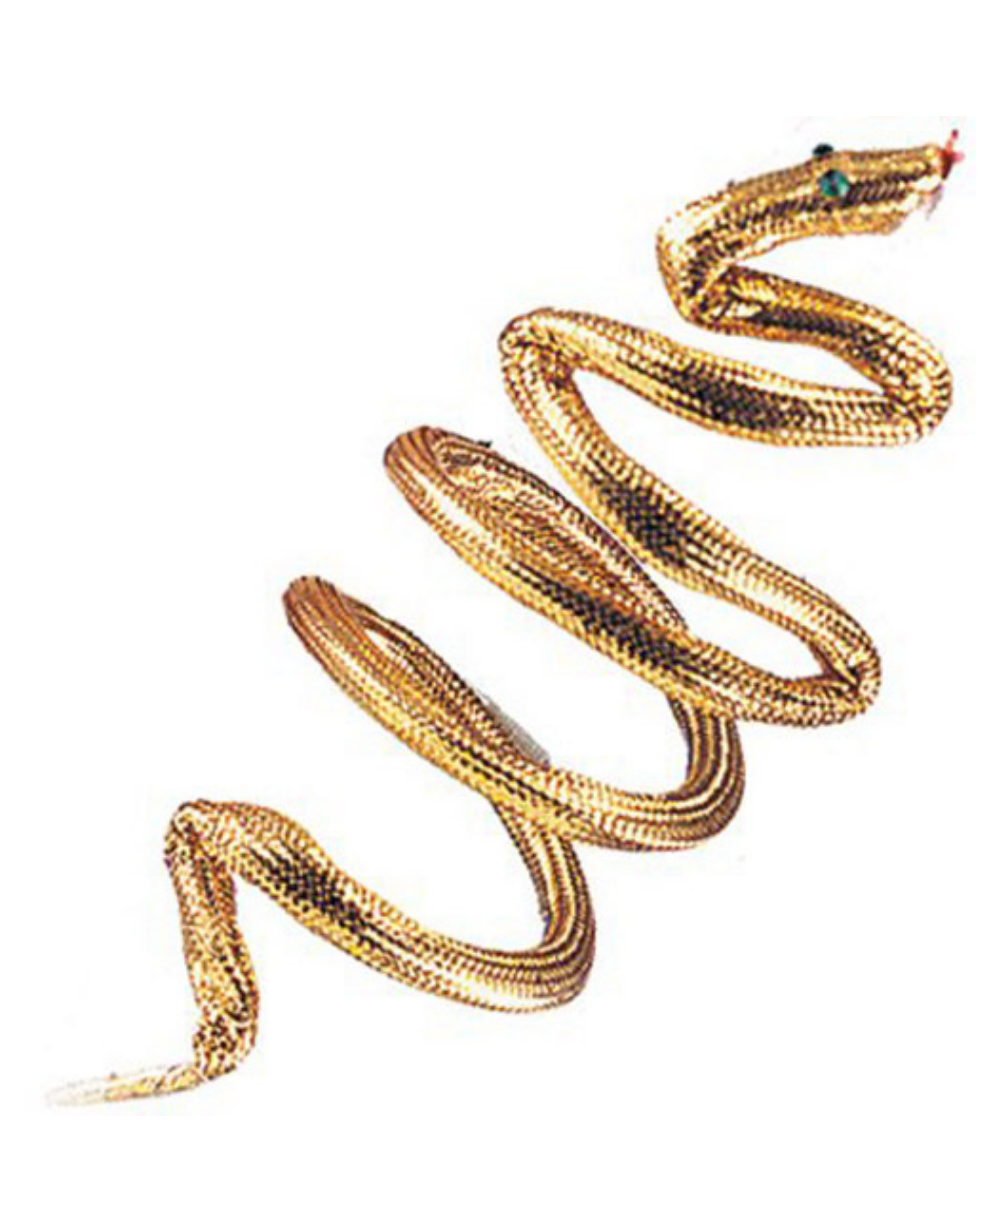 Cleopatra Golden Snake Arm Bracelet and Roman Wreath